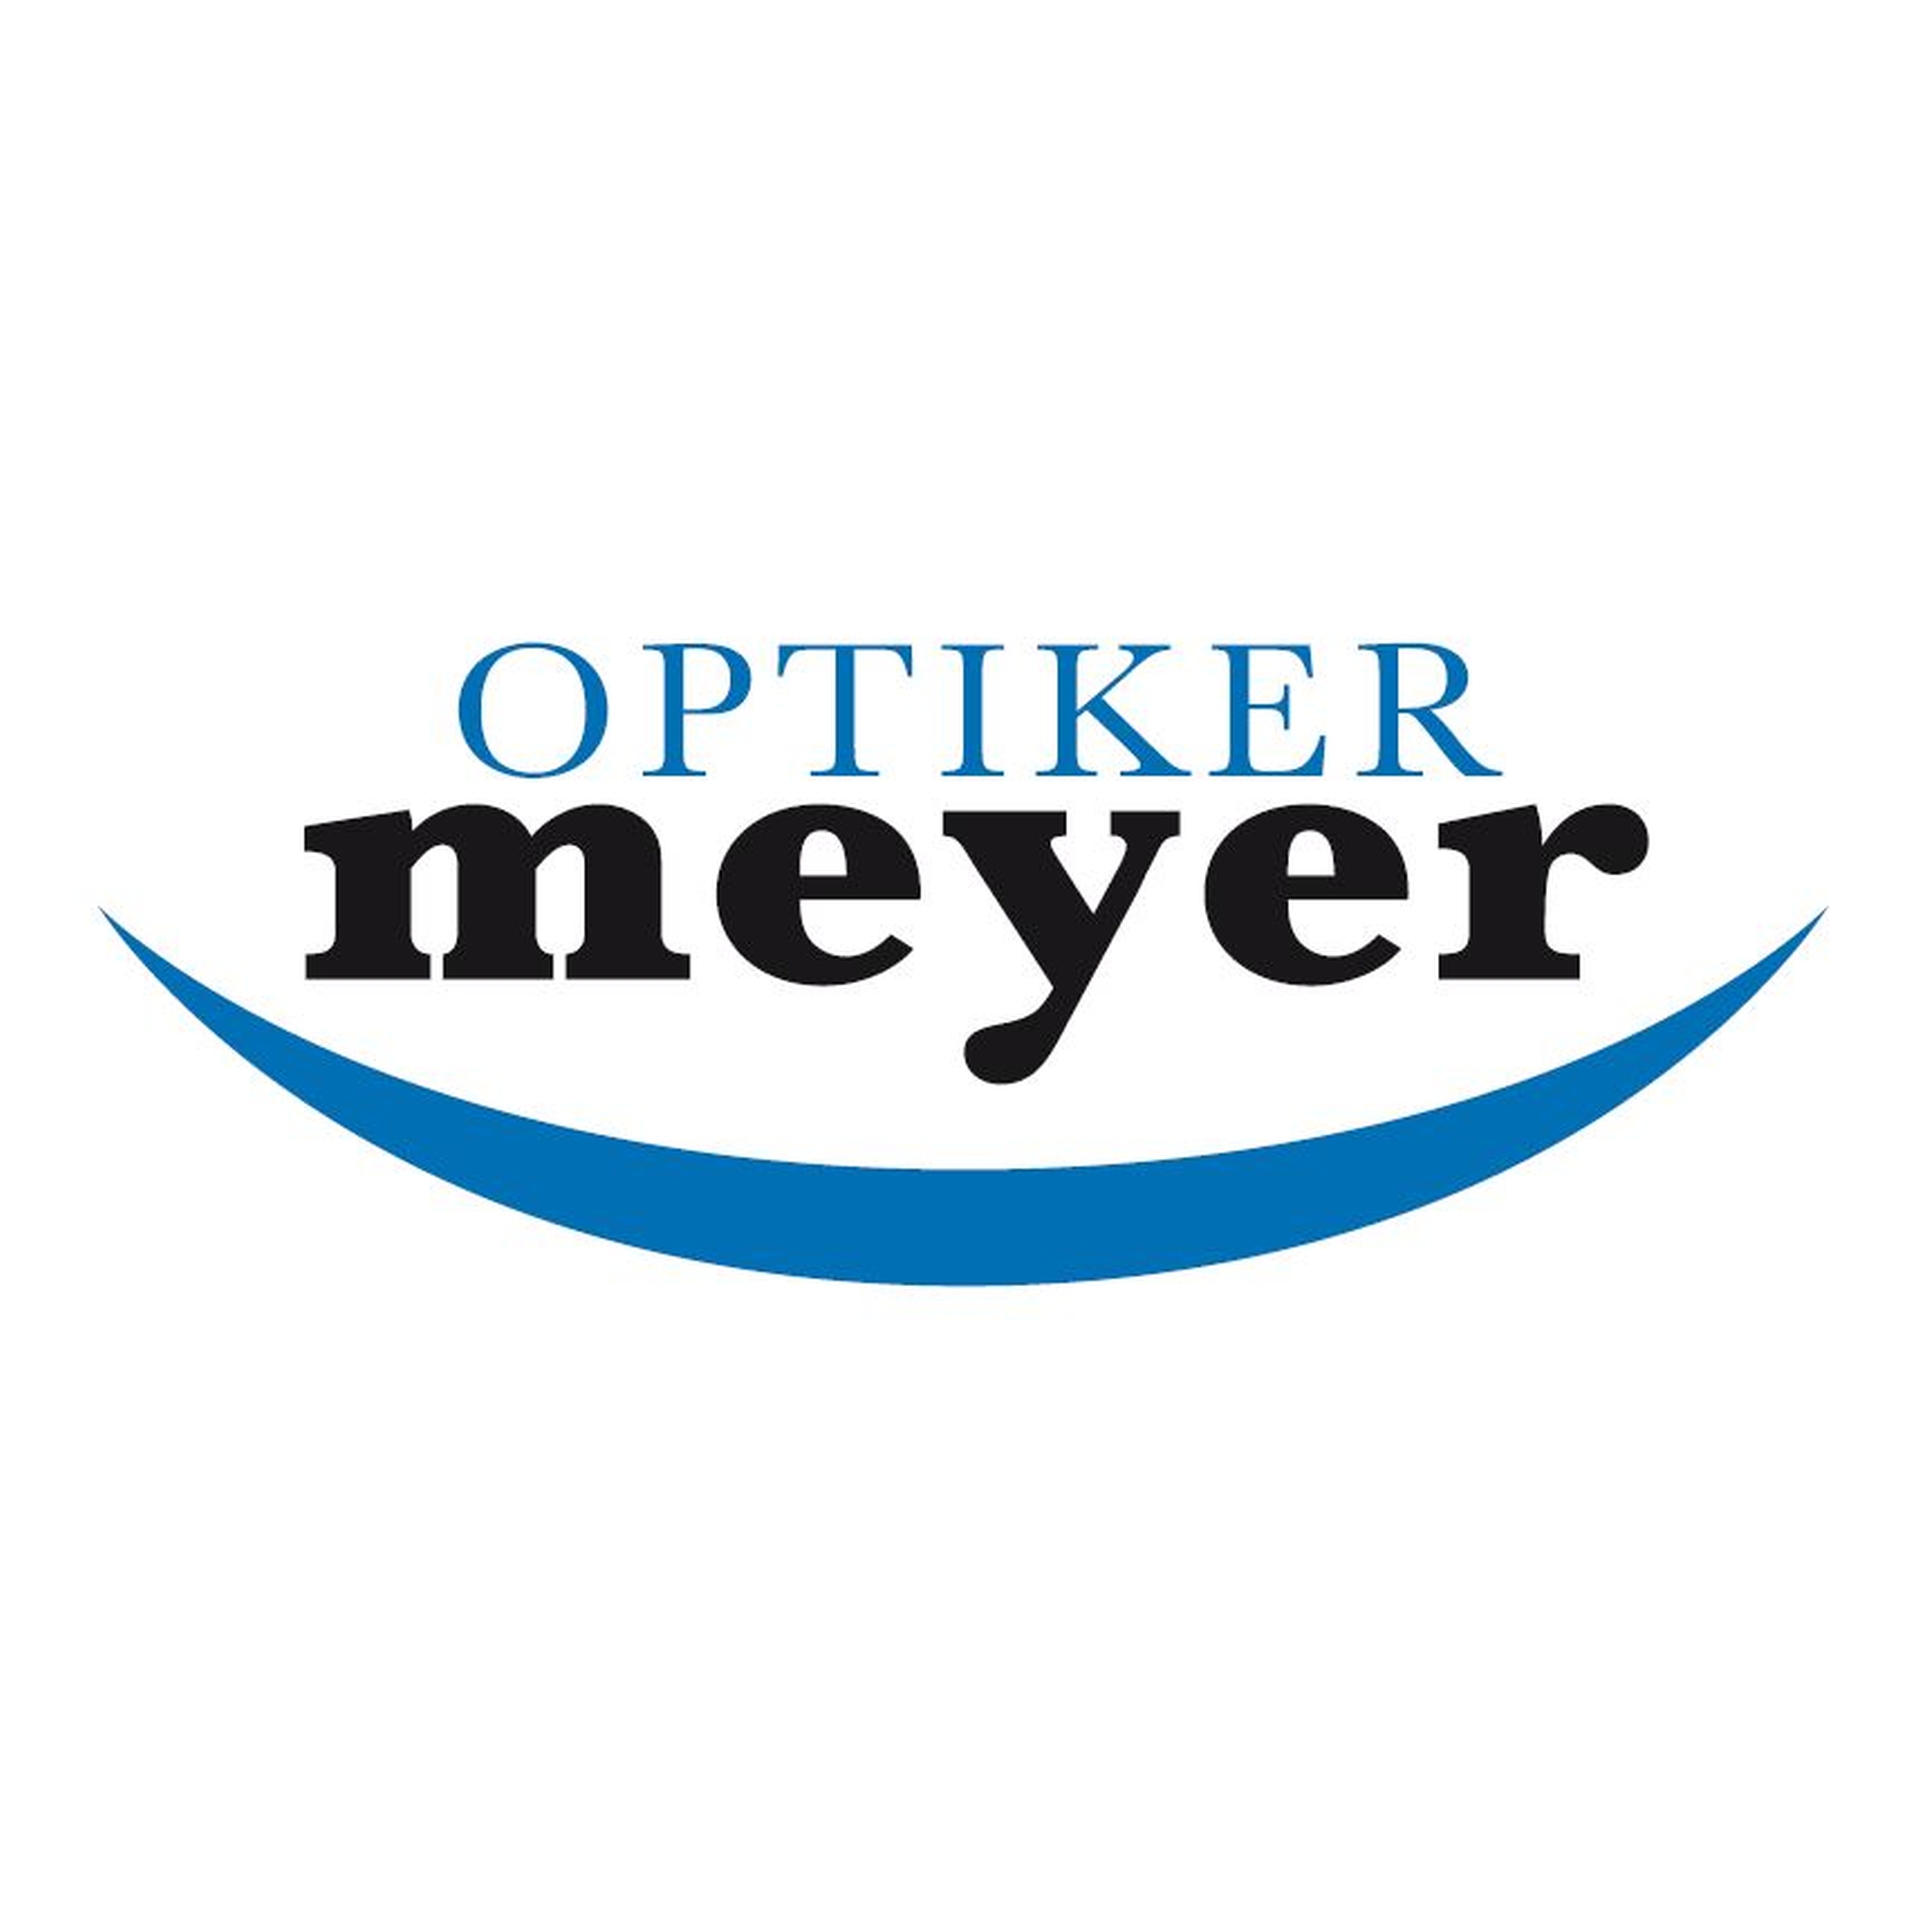 Optiker Meyer in Burgdorf Kreis Hannover - Logo